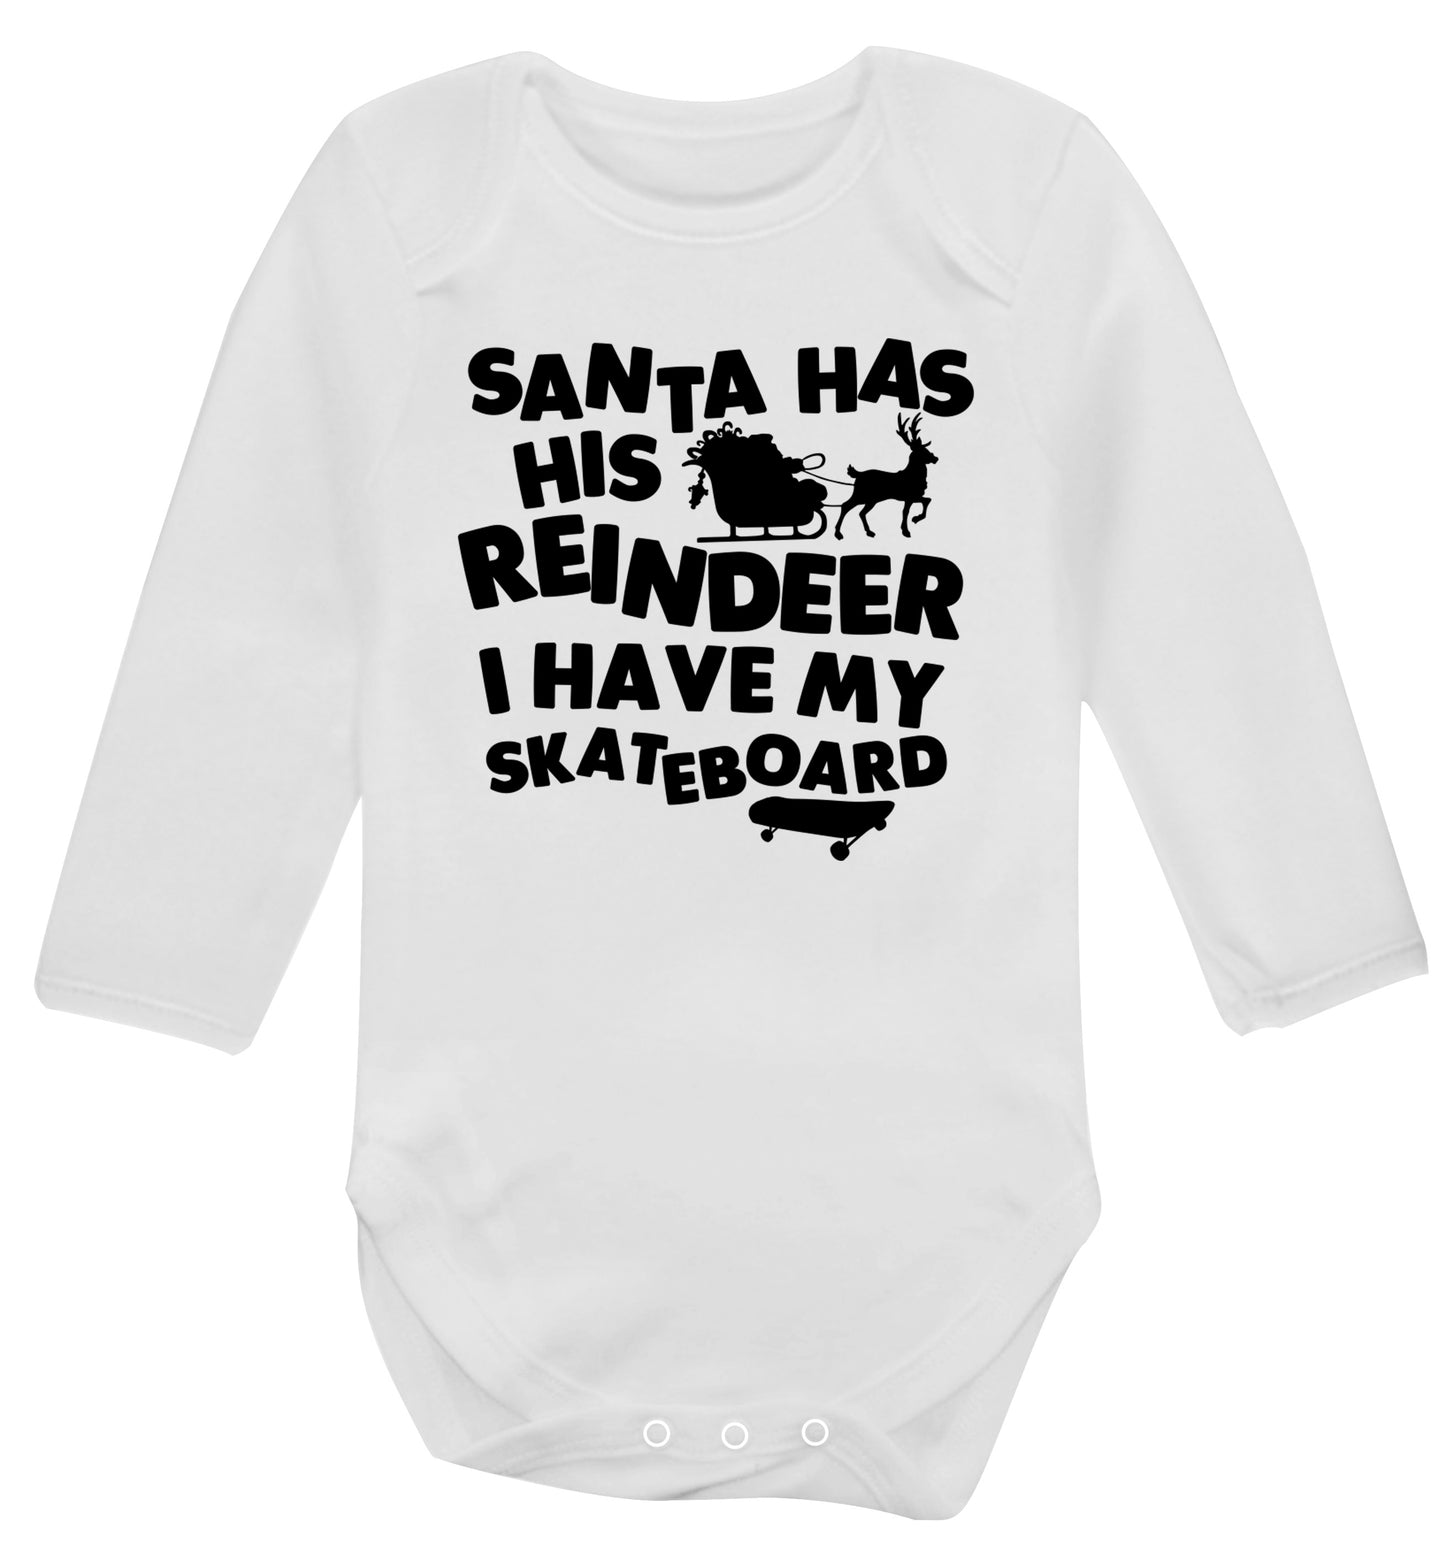 Santa has his reindeer I have my skateboard Baby Vest long sleeved white 6-12 months